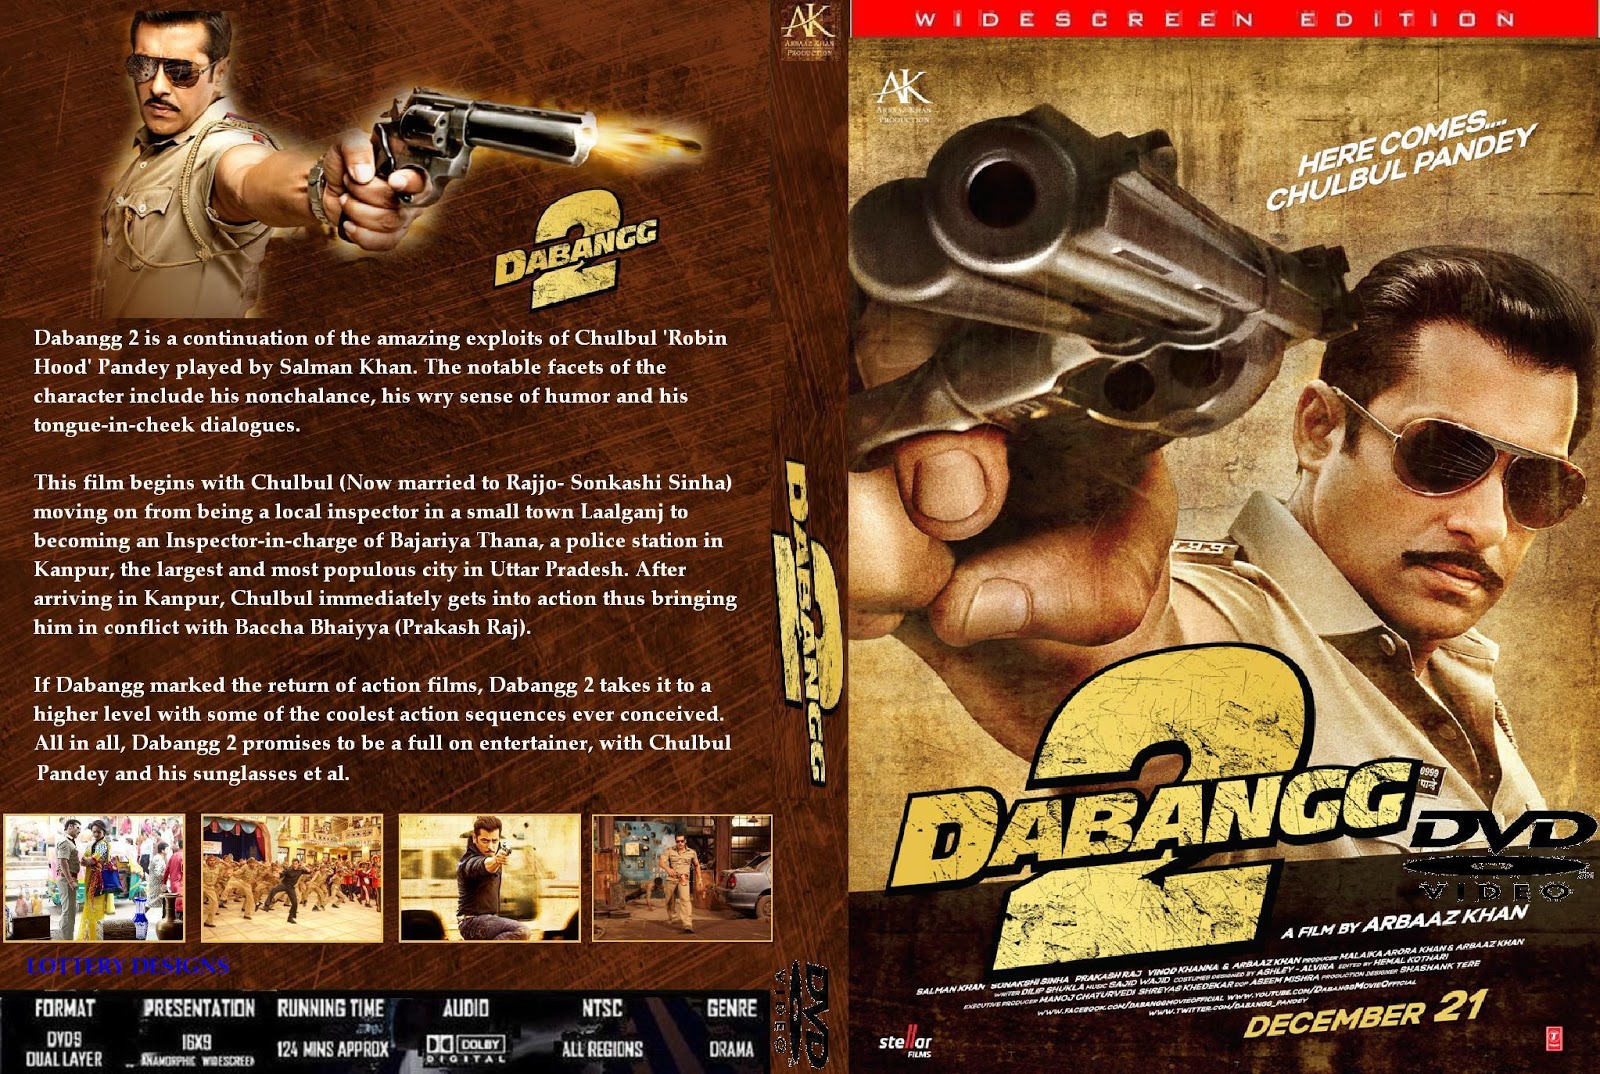 Dabangg 2 (2012) - Dvd Scr Rip - 400 Mb